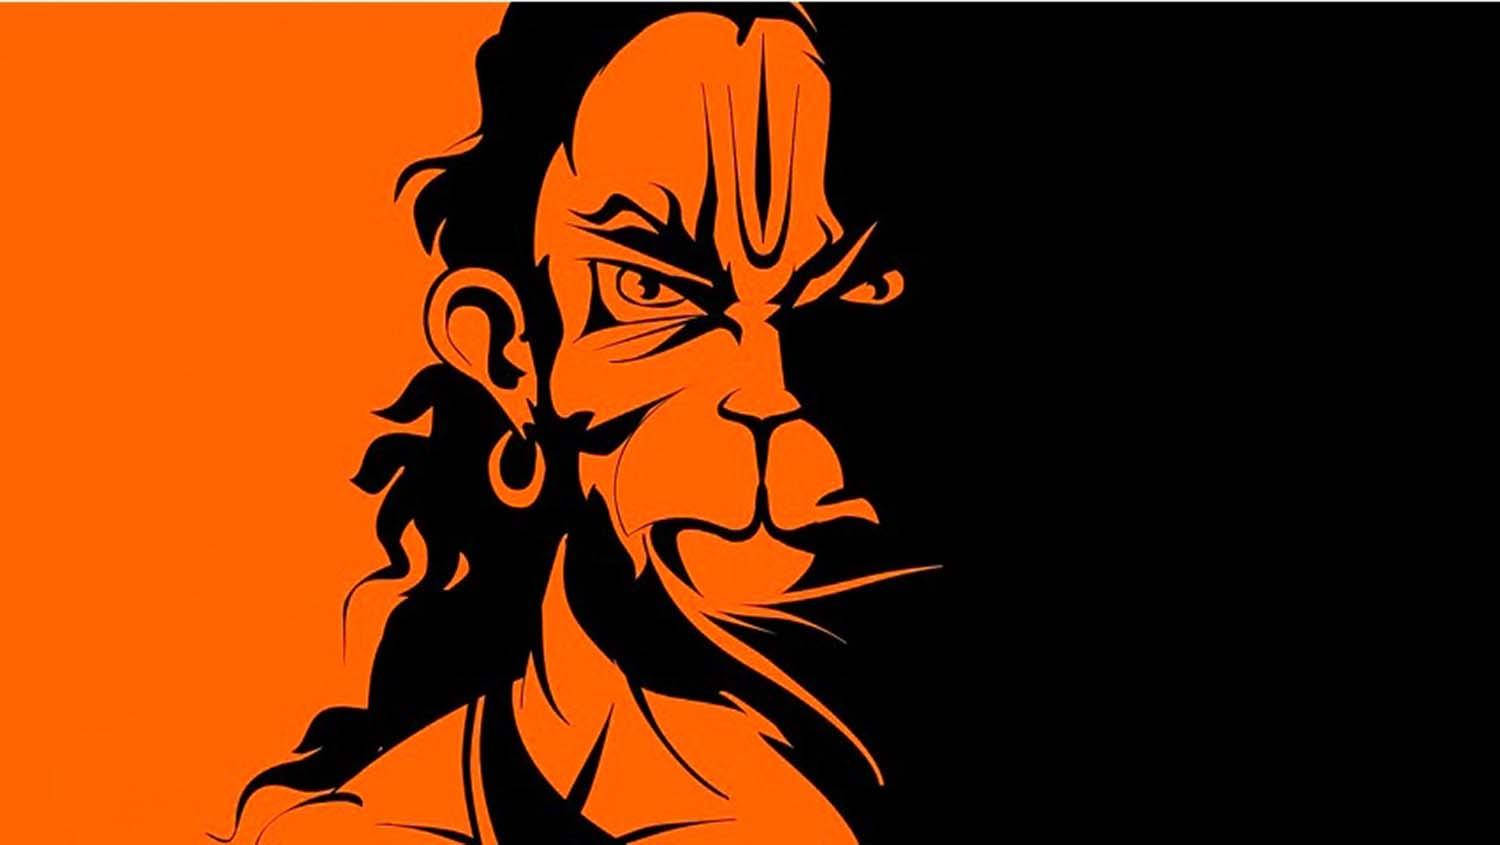 Angry Hanuman Hindu God Wallpaper